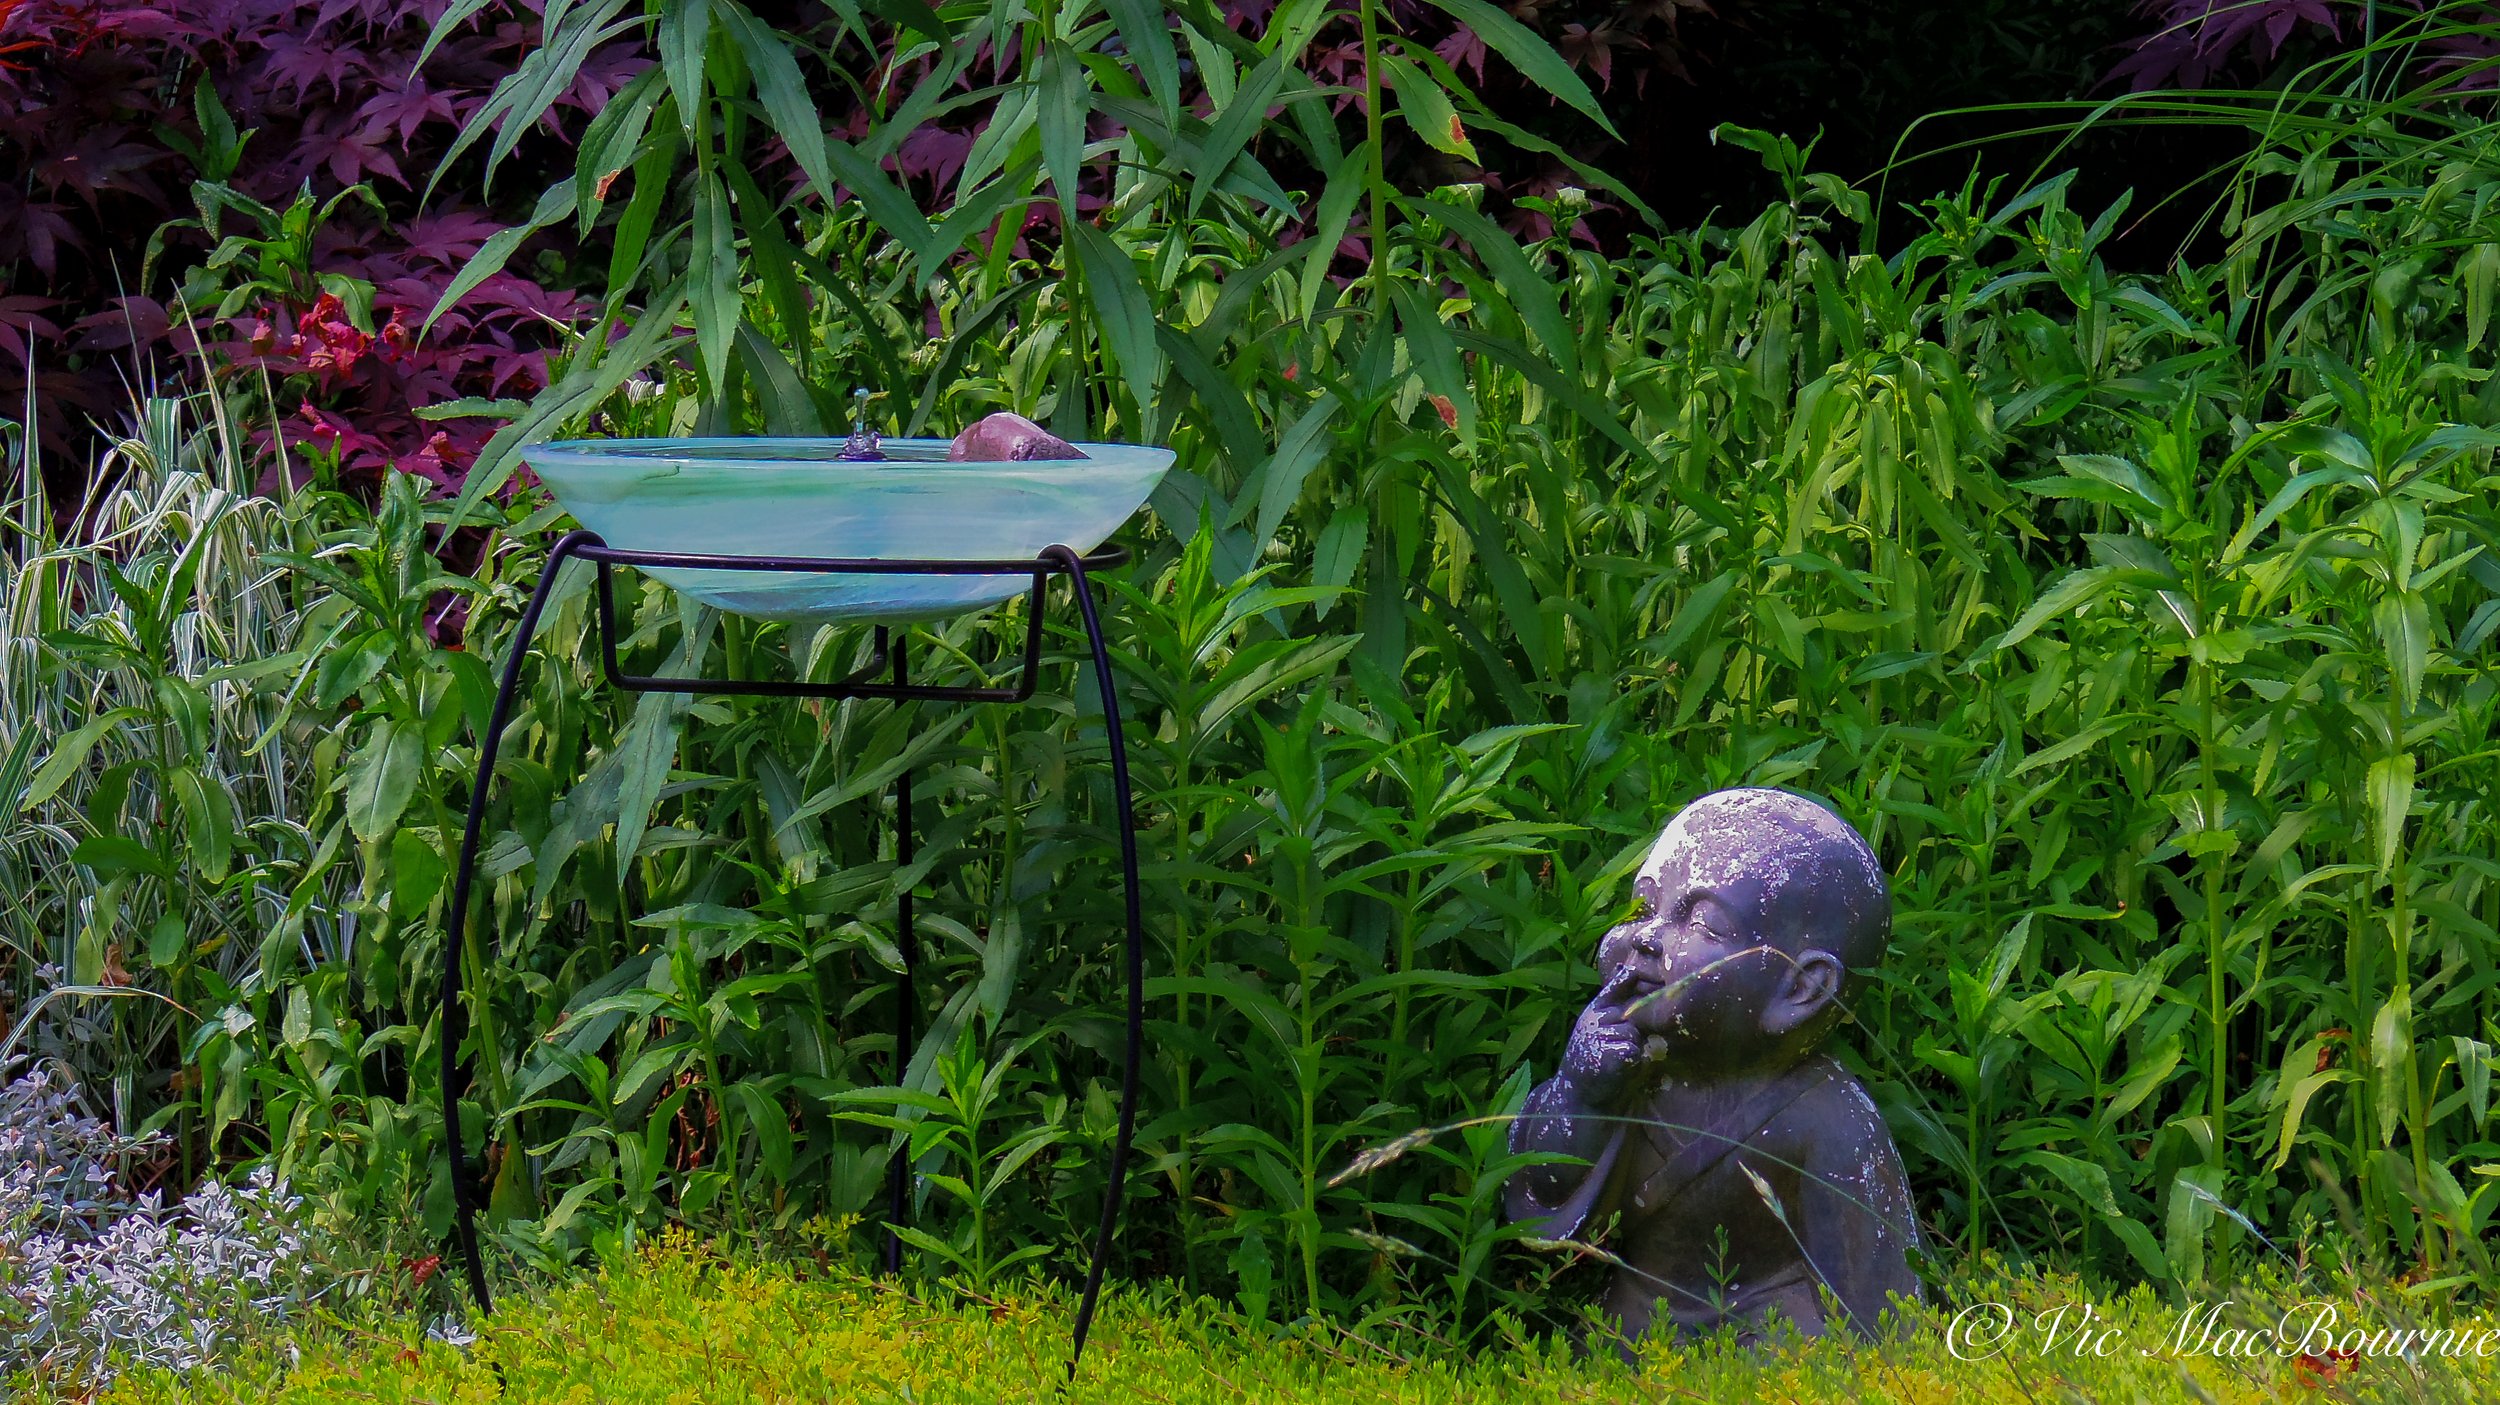 Garden statuary and our home made bird bath